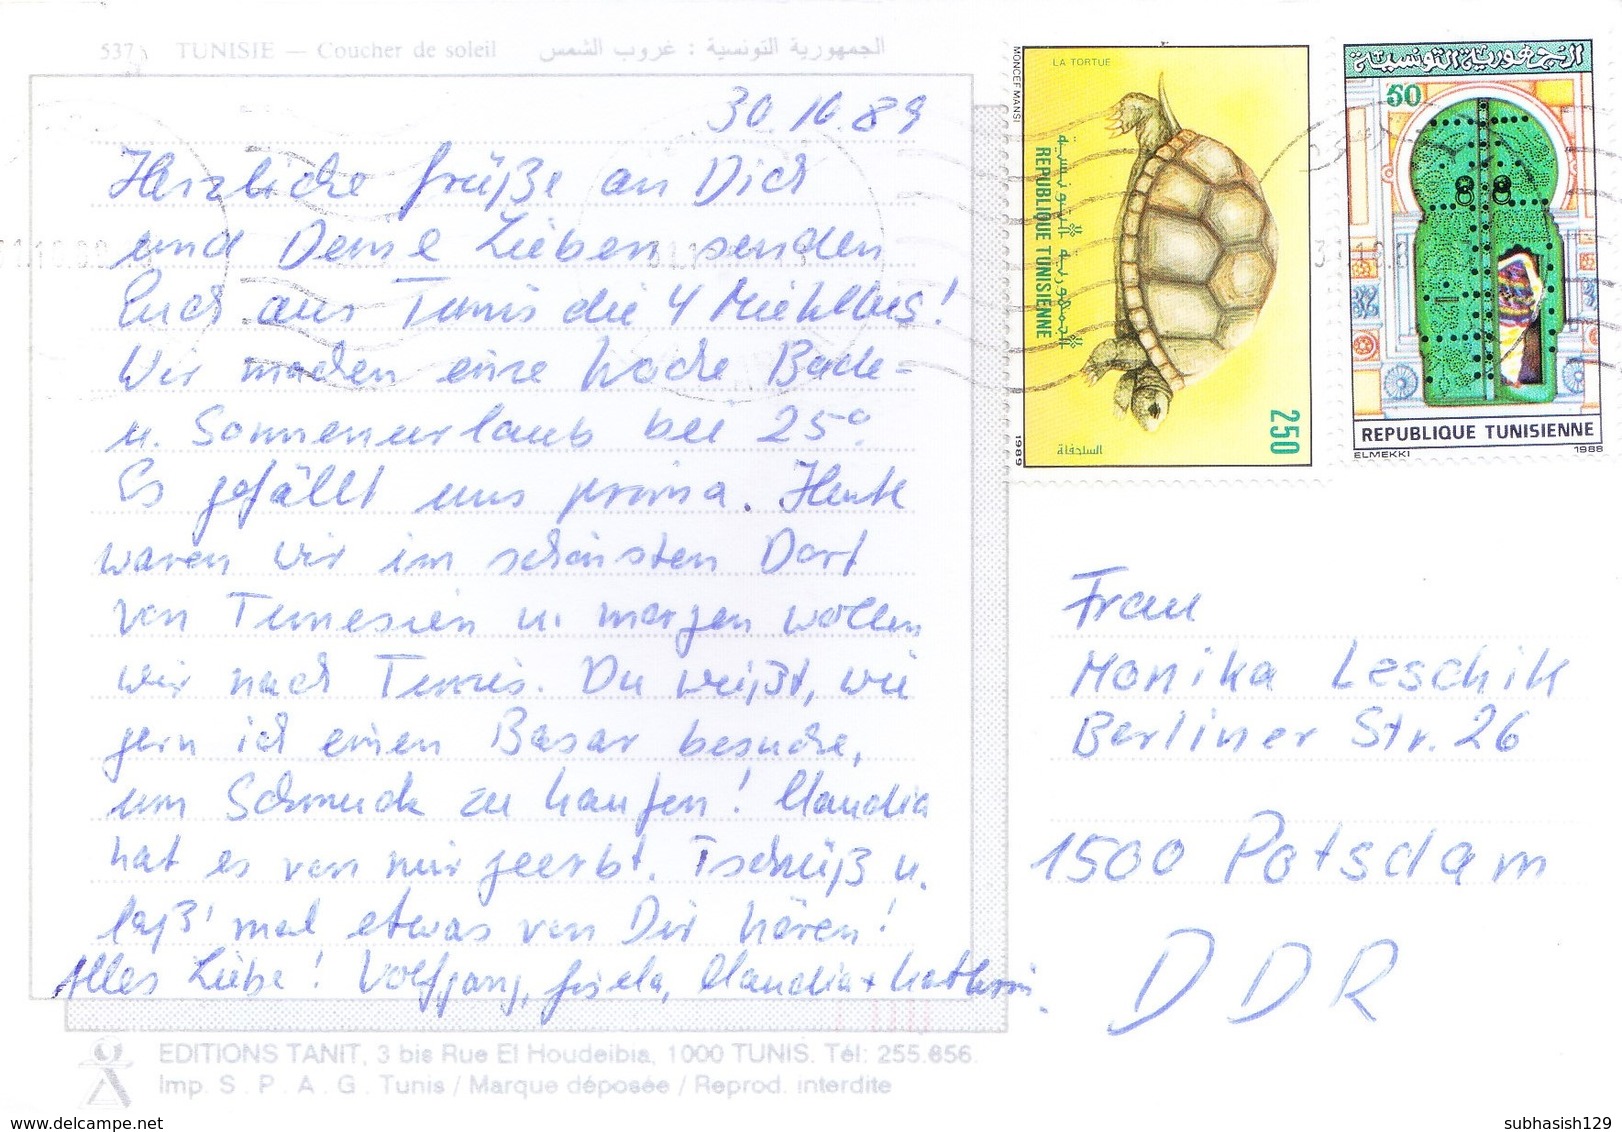 TUNISIA : 1989 PICUTURE POST CARD COMMERCIALLY SENT TO GERMANY : SEA VIEW - COUCHER DE SOLEIL - Tunisia